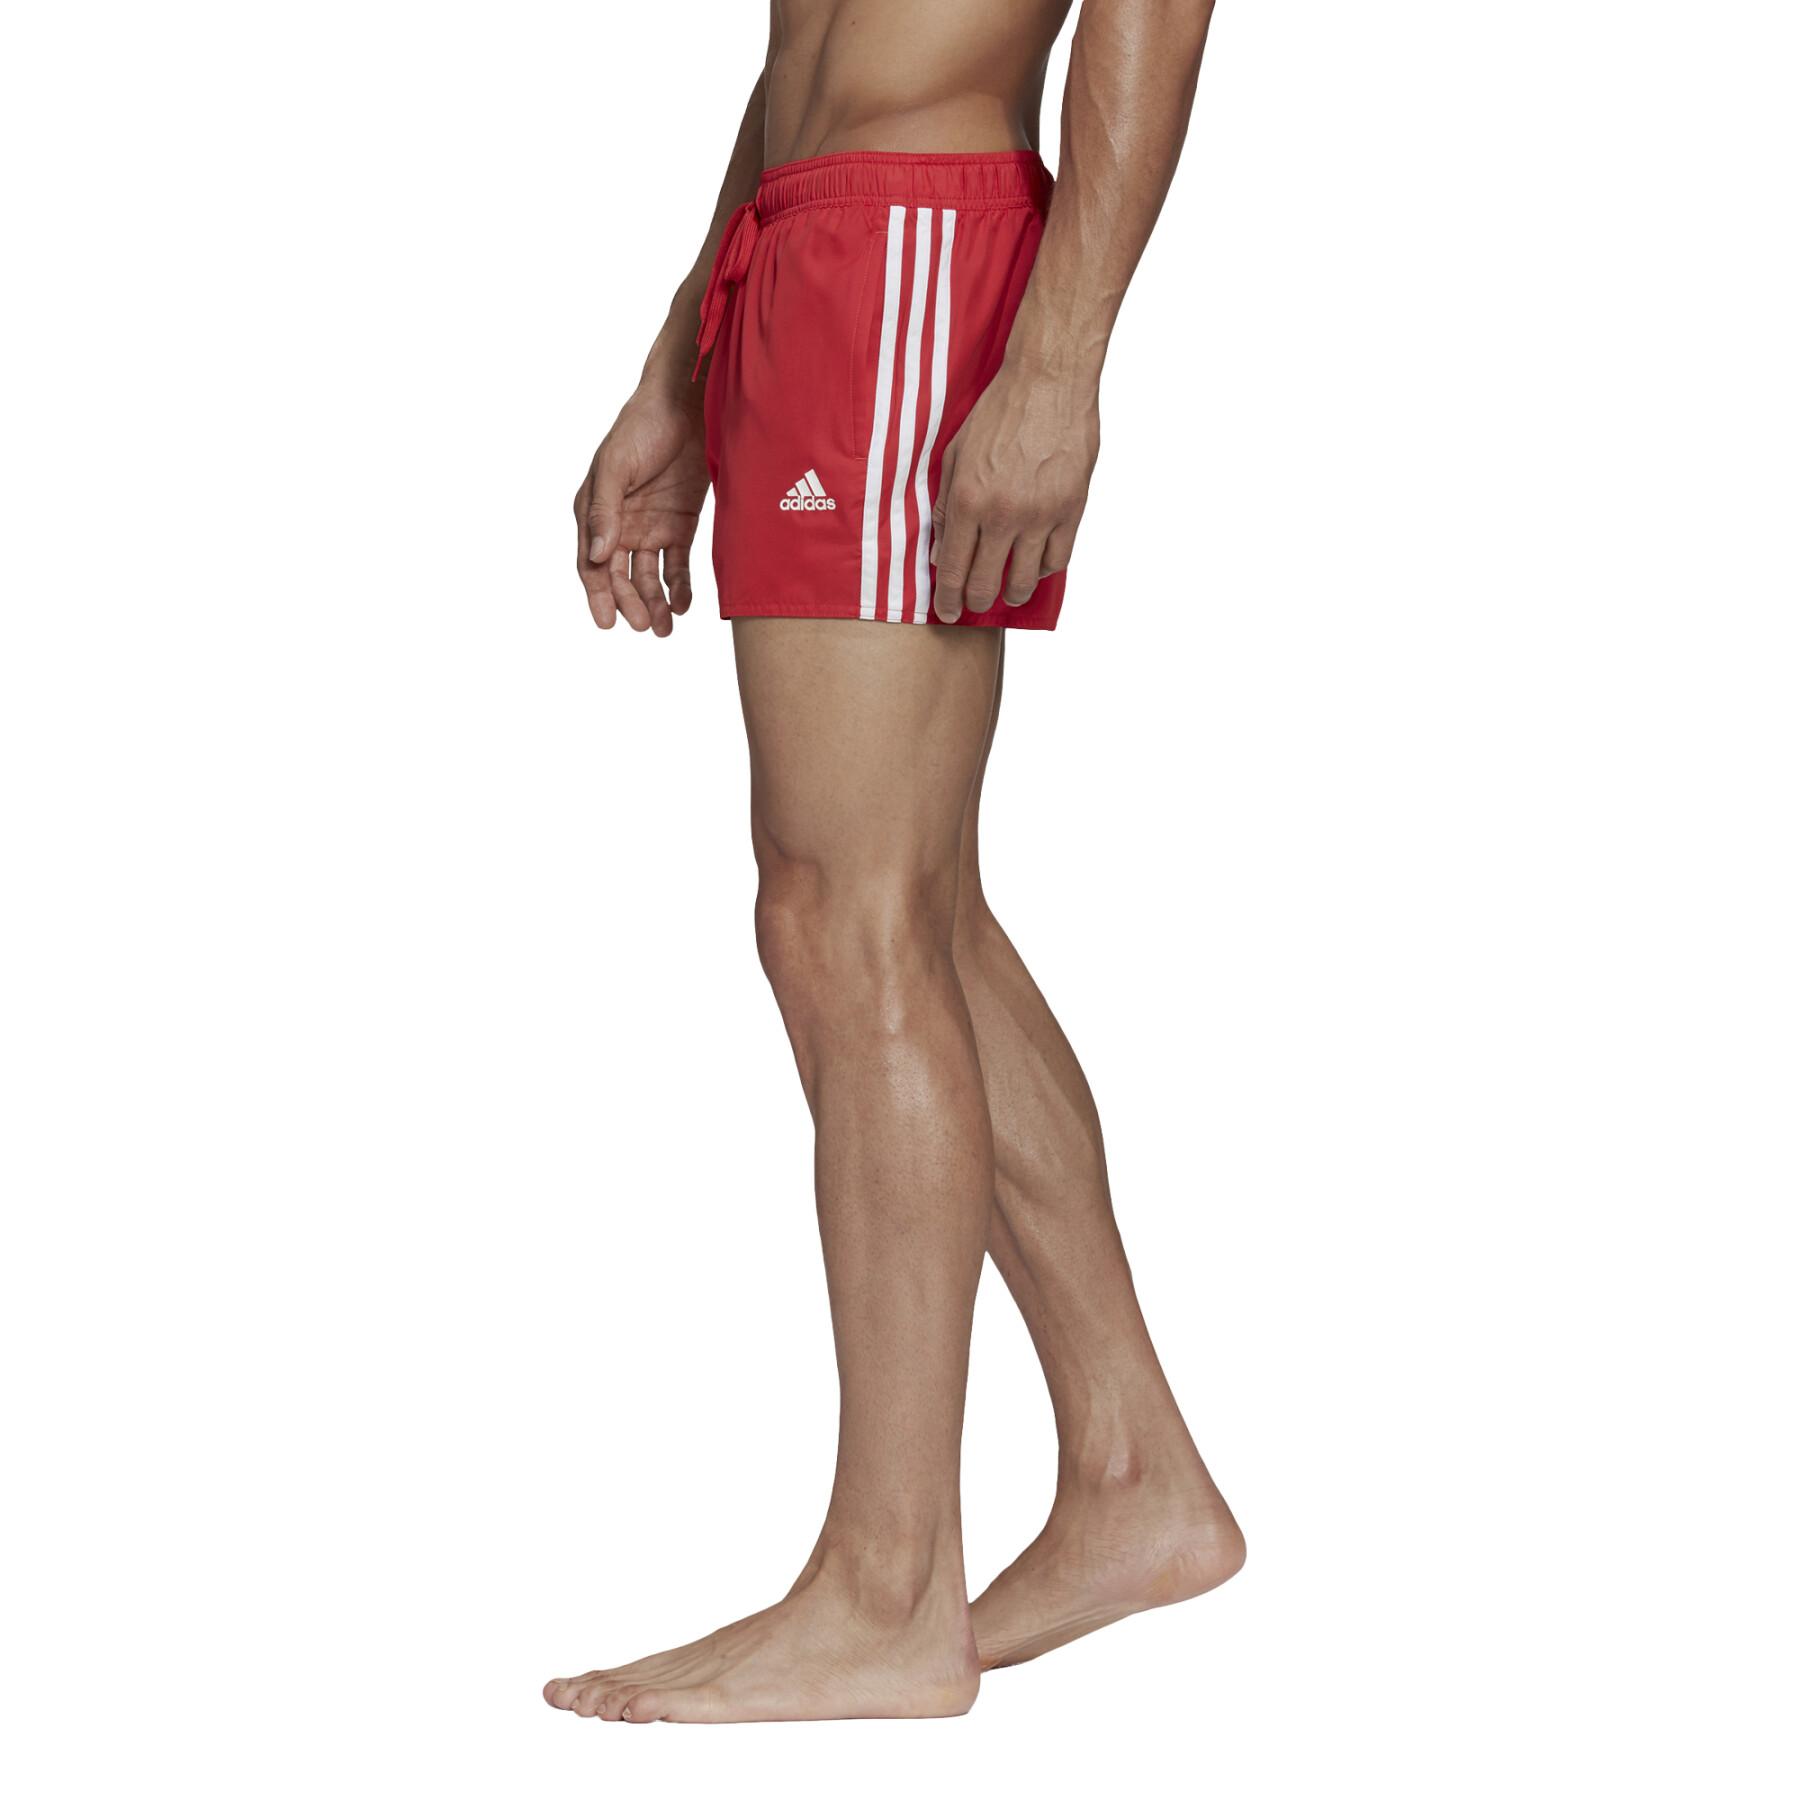 Clx 3-Stripes Swim Shorts